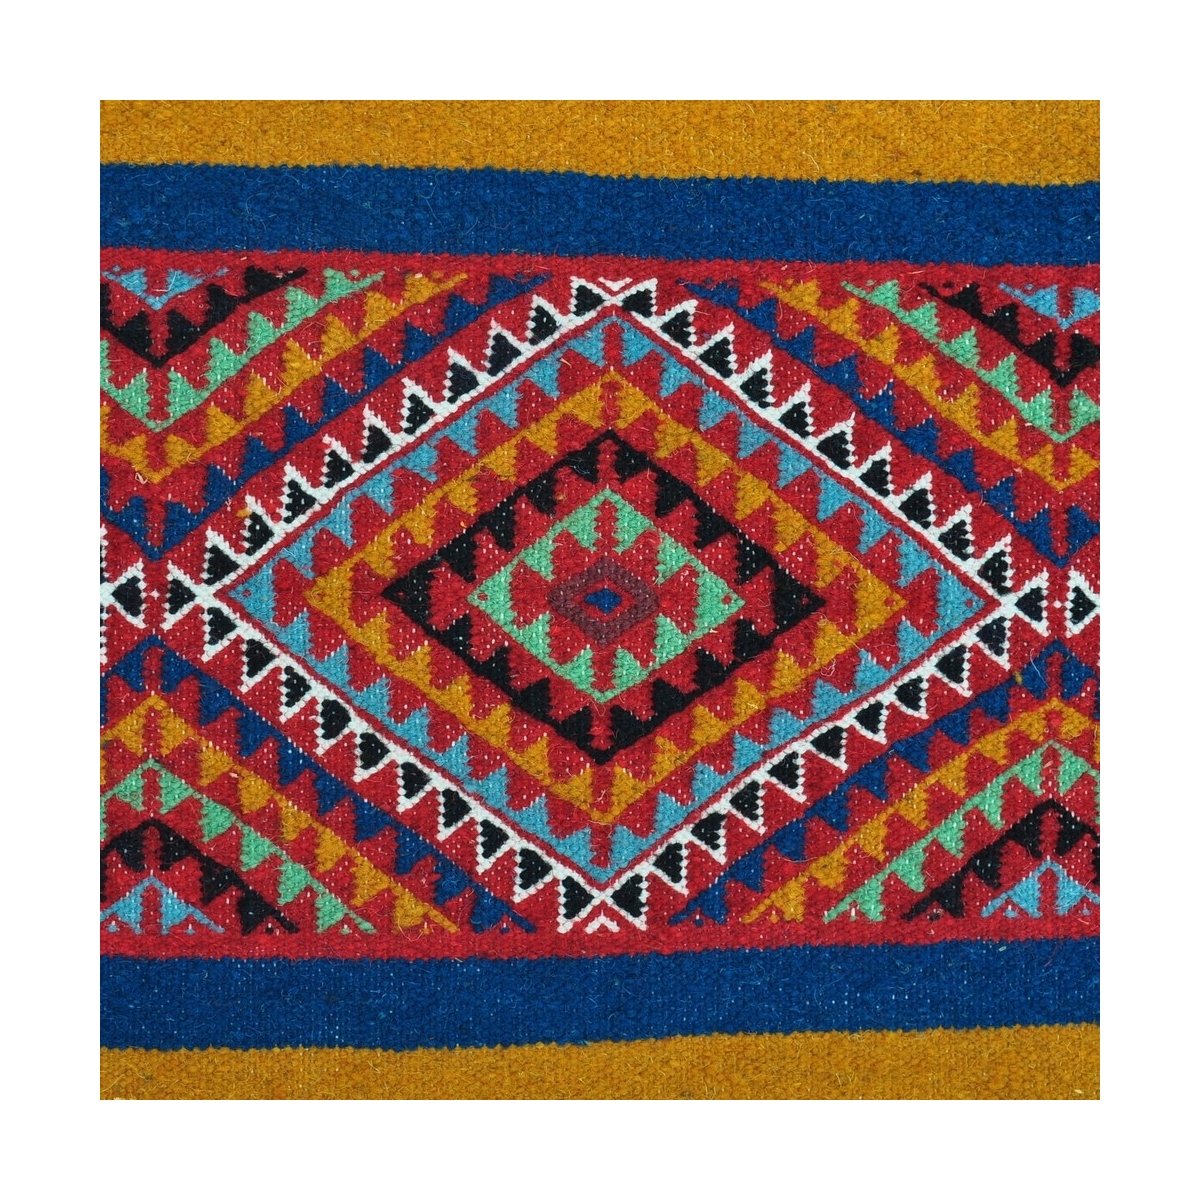 Berber tapijt Tapijt Kilim Kef 60x110 Veelkleurig (Handgeweven, Wol, Tunesië) Tunesisch kilimdeken, Marokkaanse stijl. Rechthoek